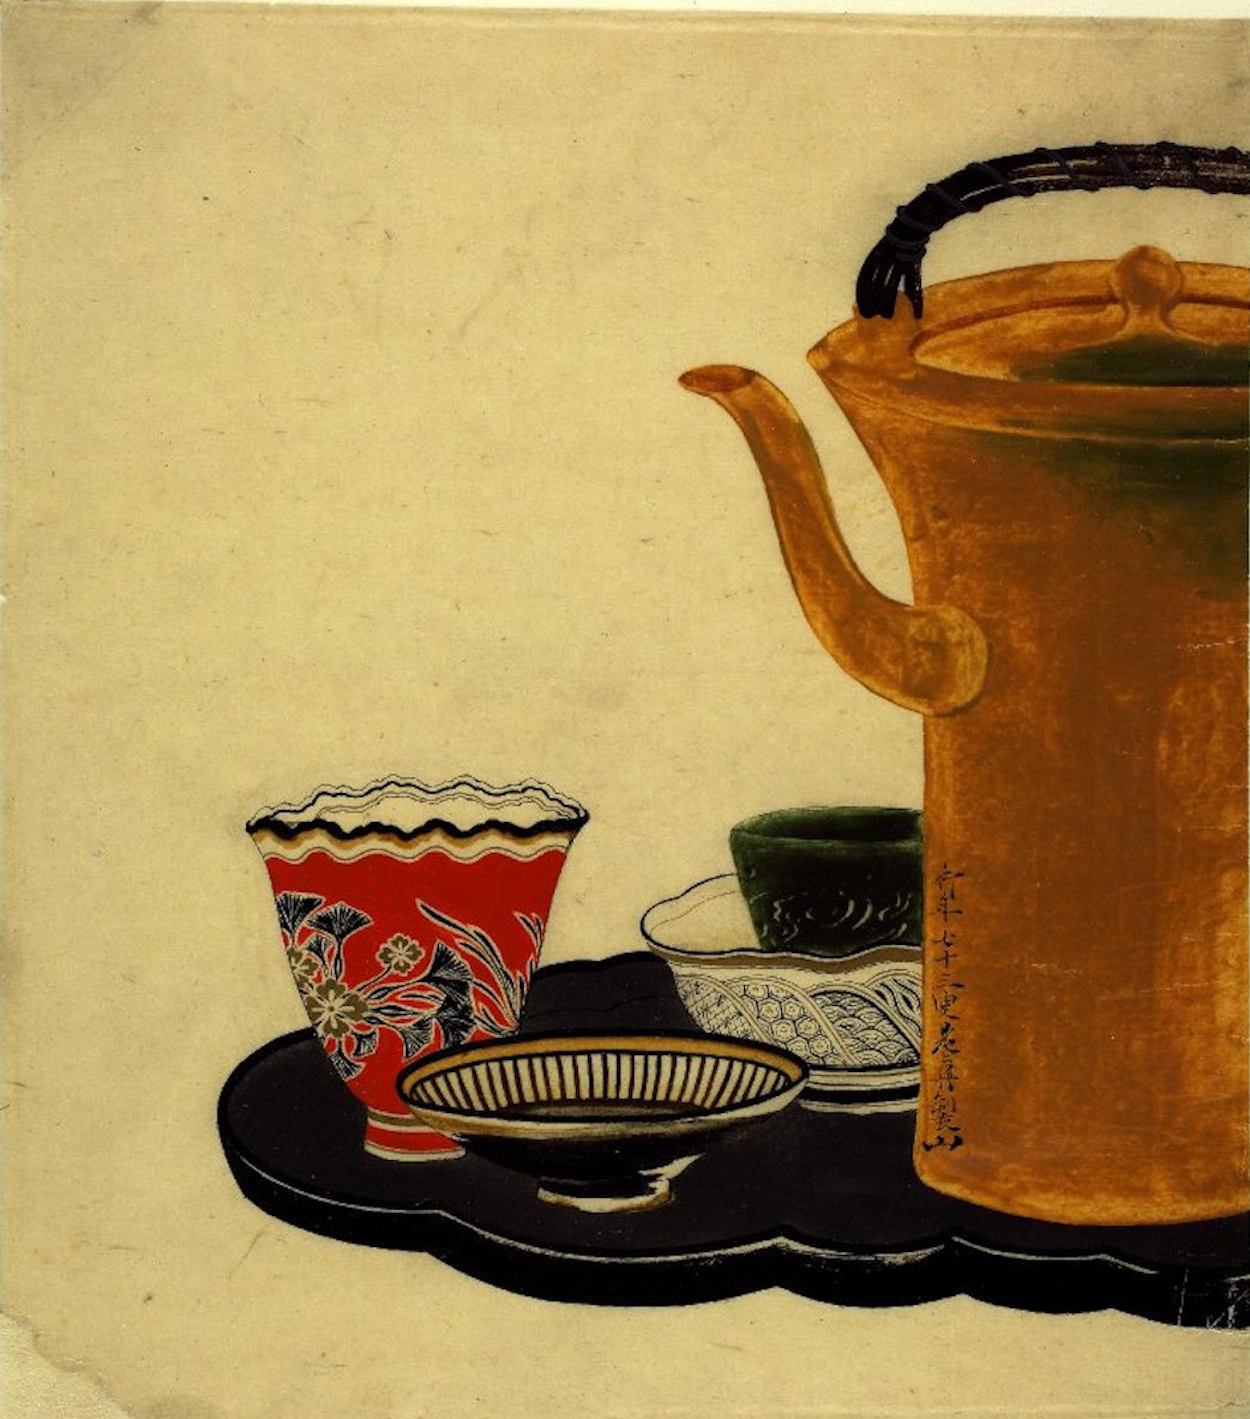 Tea Vessels on Tray by Shibata Zeshin - 1879 British Museum